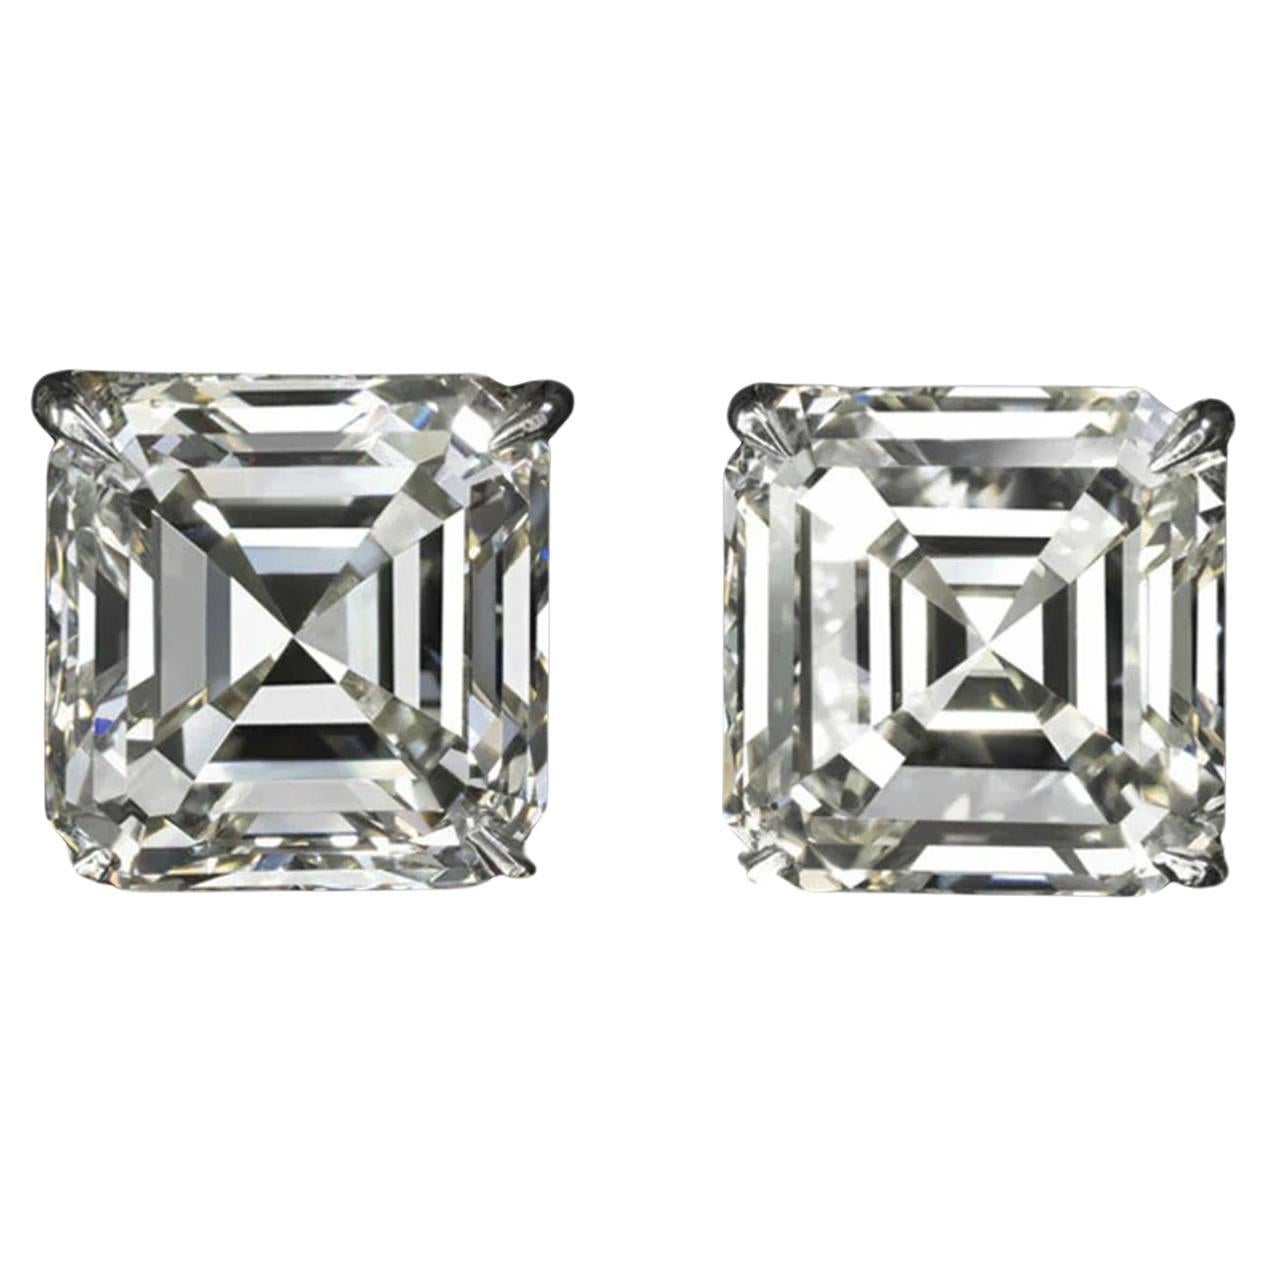 Exceptional GIA Certified 8 Carat Emerald Cut Diamond Studs